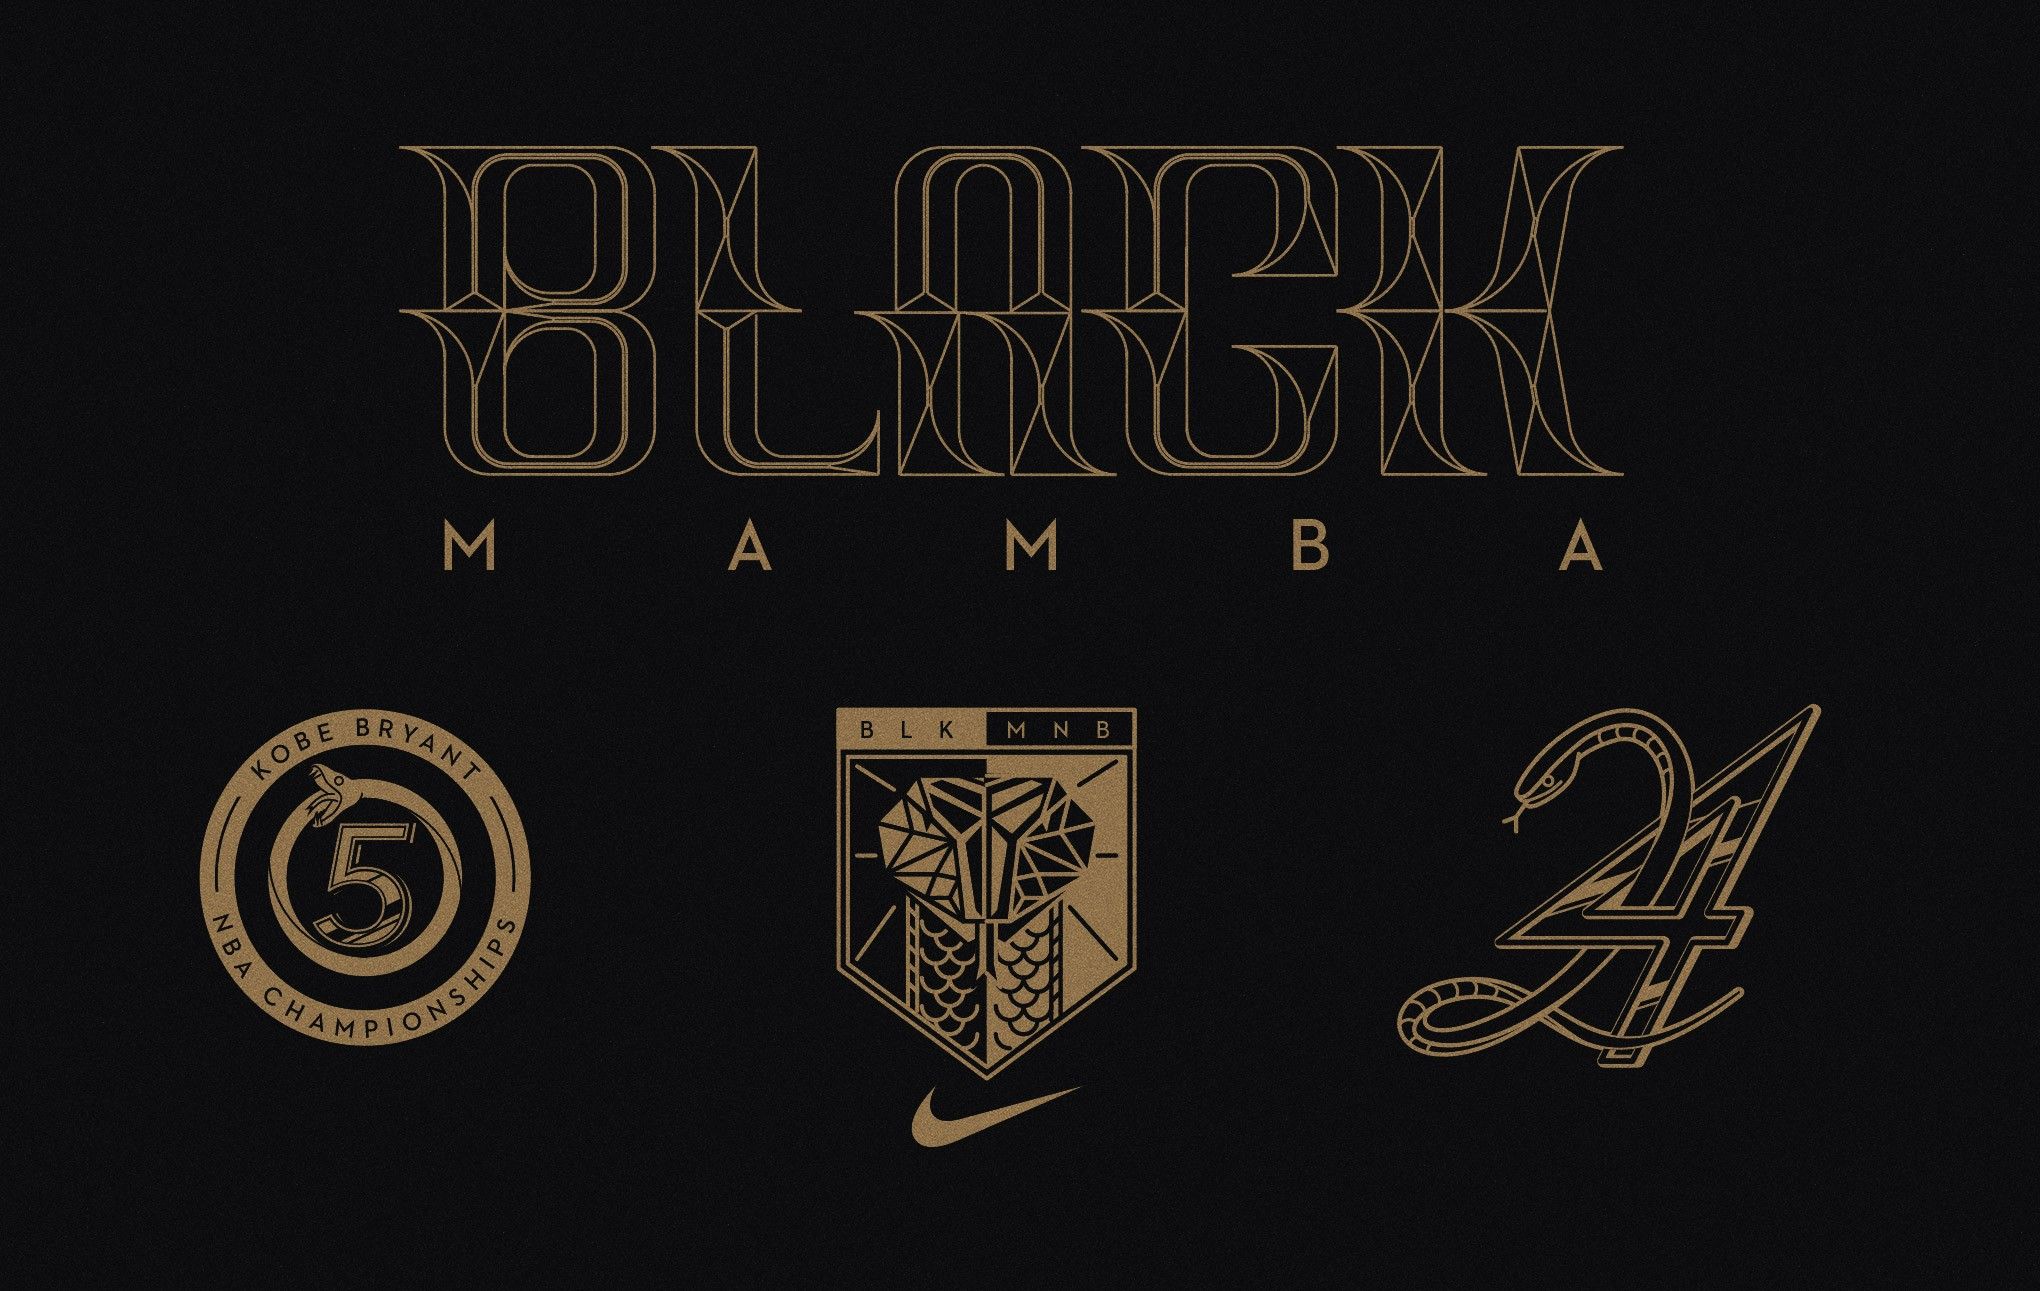 Nike Kobe Logo Hd Wallpapers